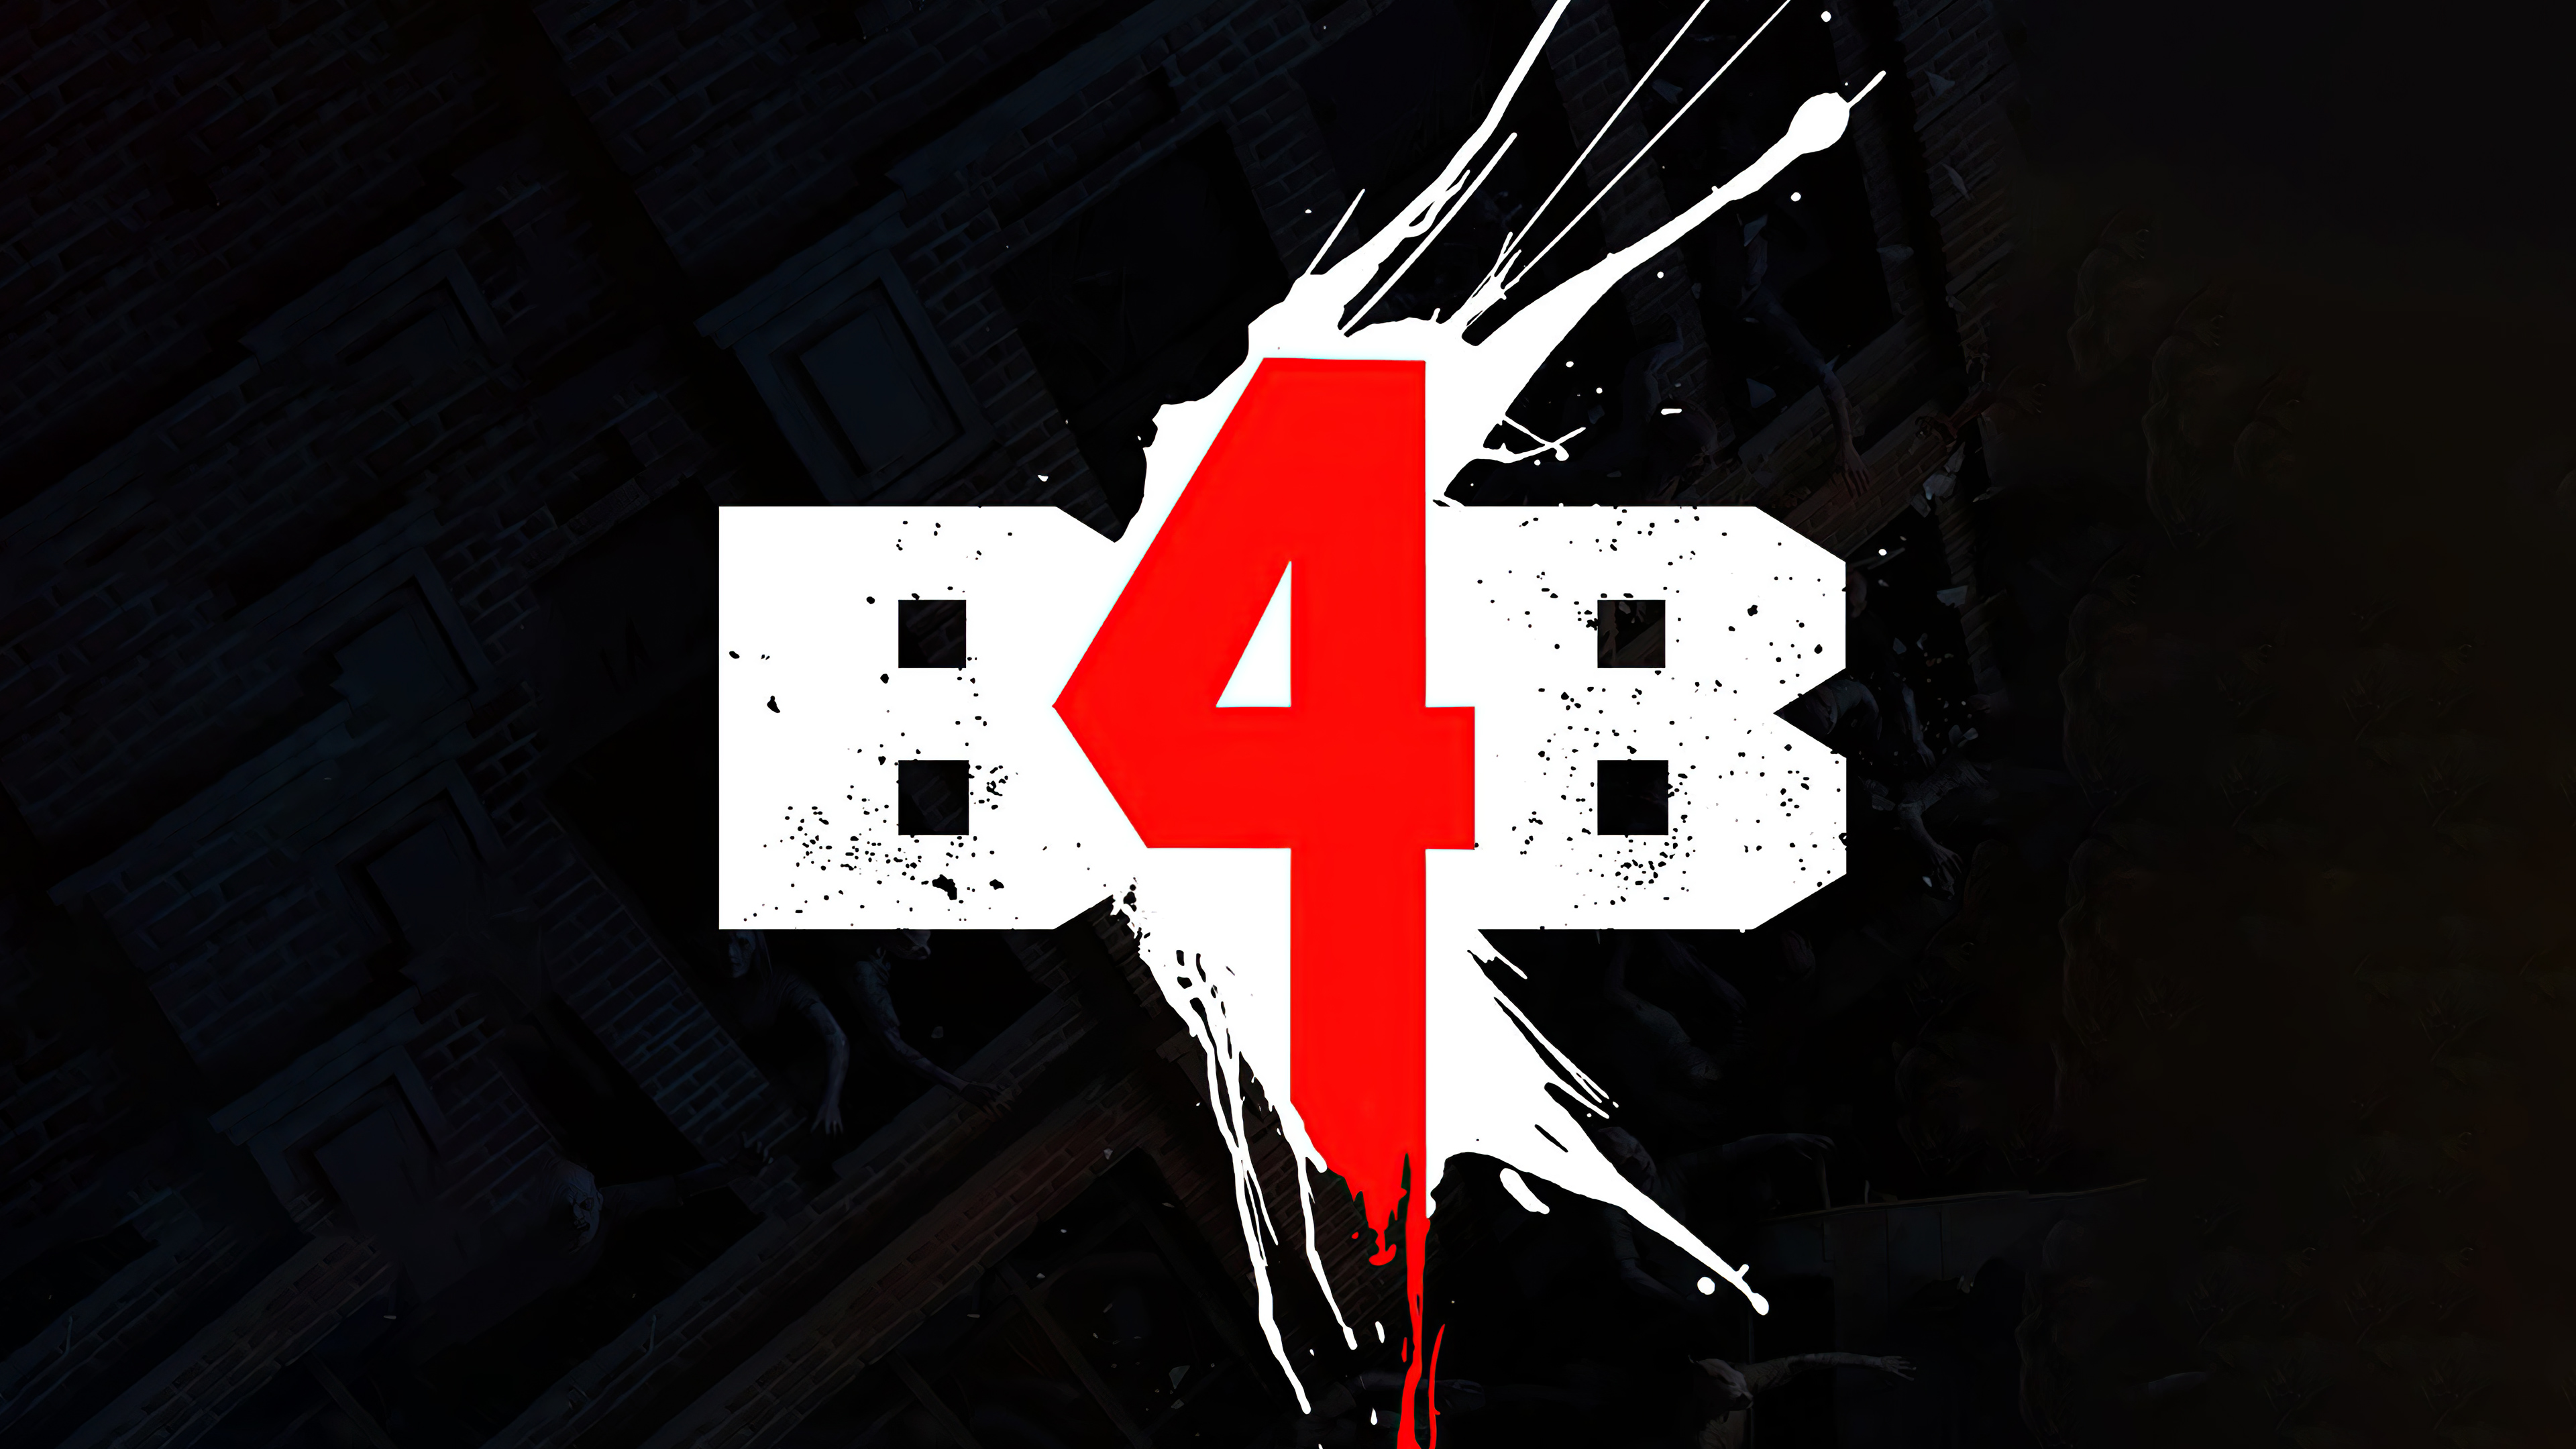 Video Game Back 4 Blood HD Wallpaper | Background Image